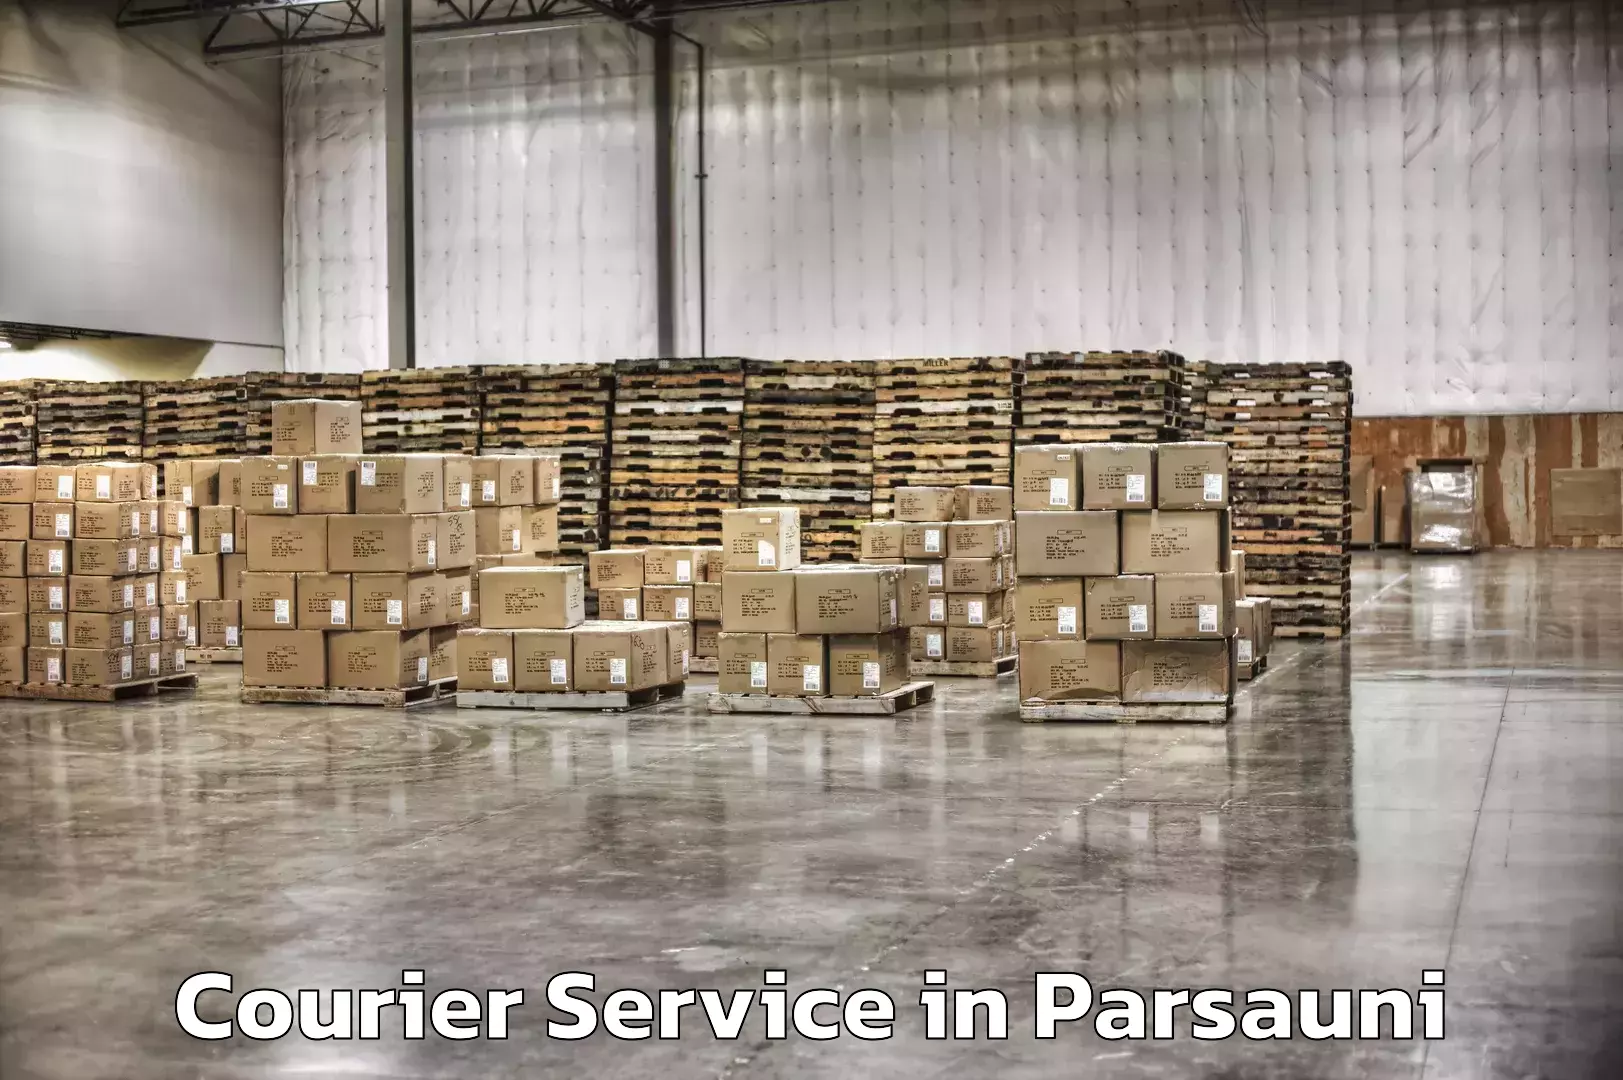 Efficient order fulfillment in Parsauni